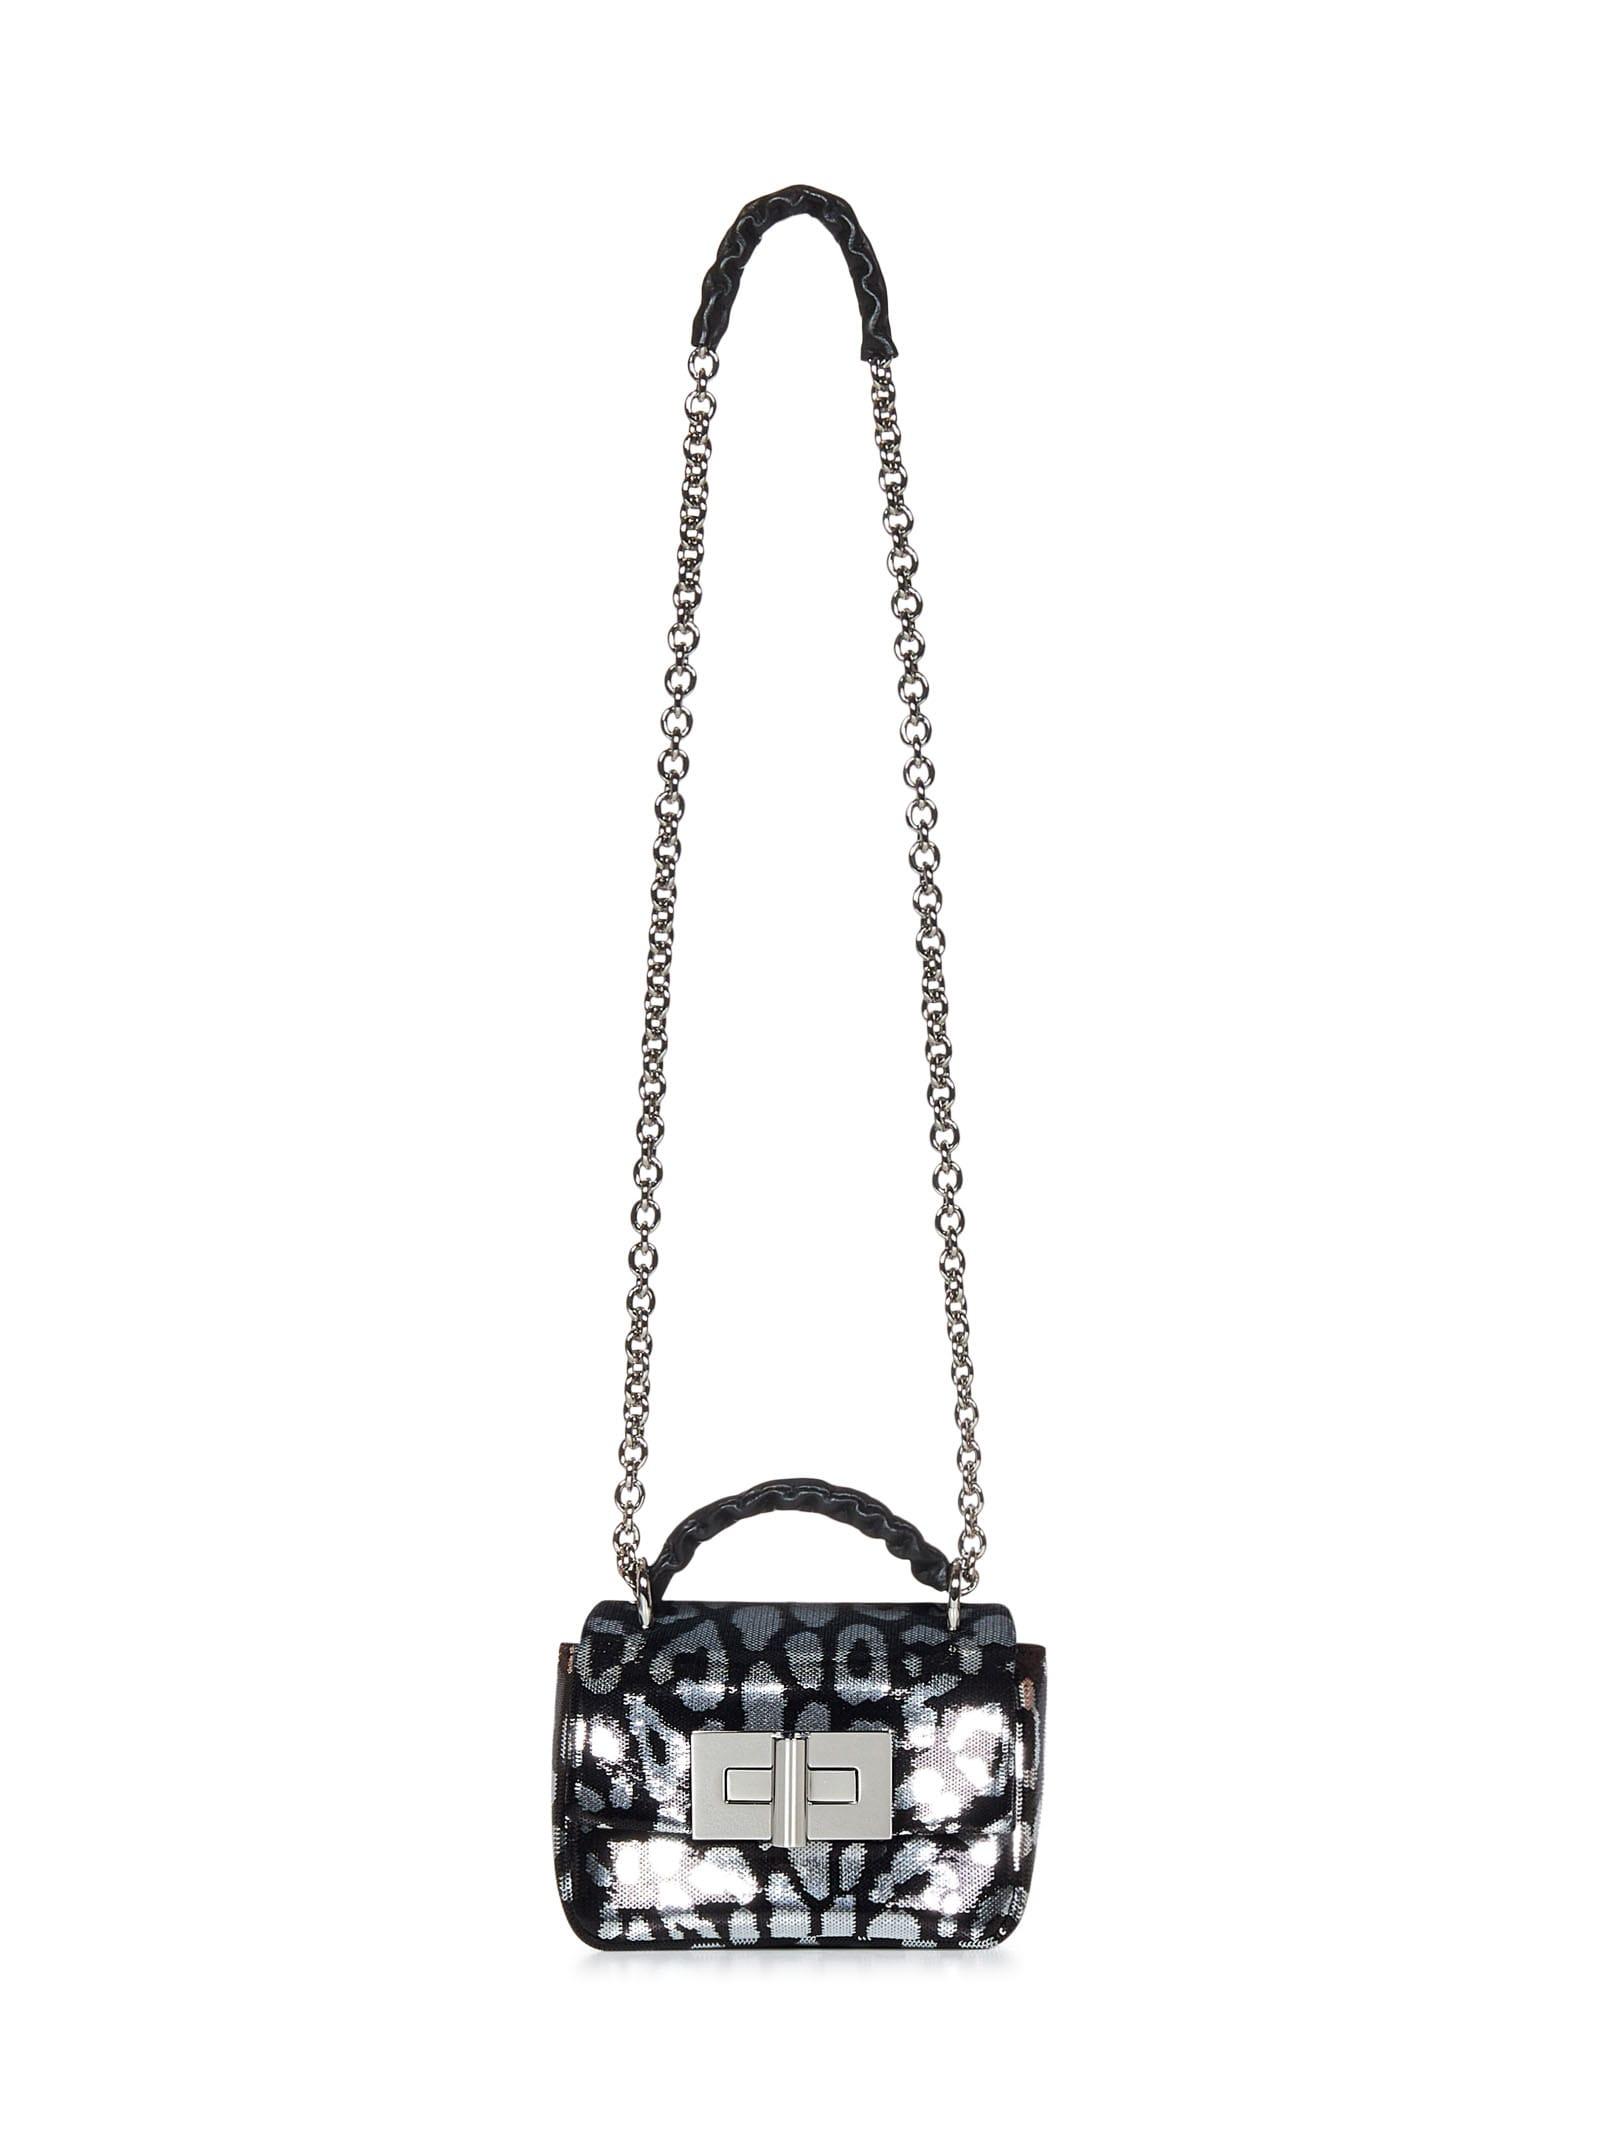 Tom Ford - Natalia Black Leather Small Chain Bag